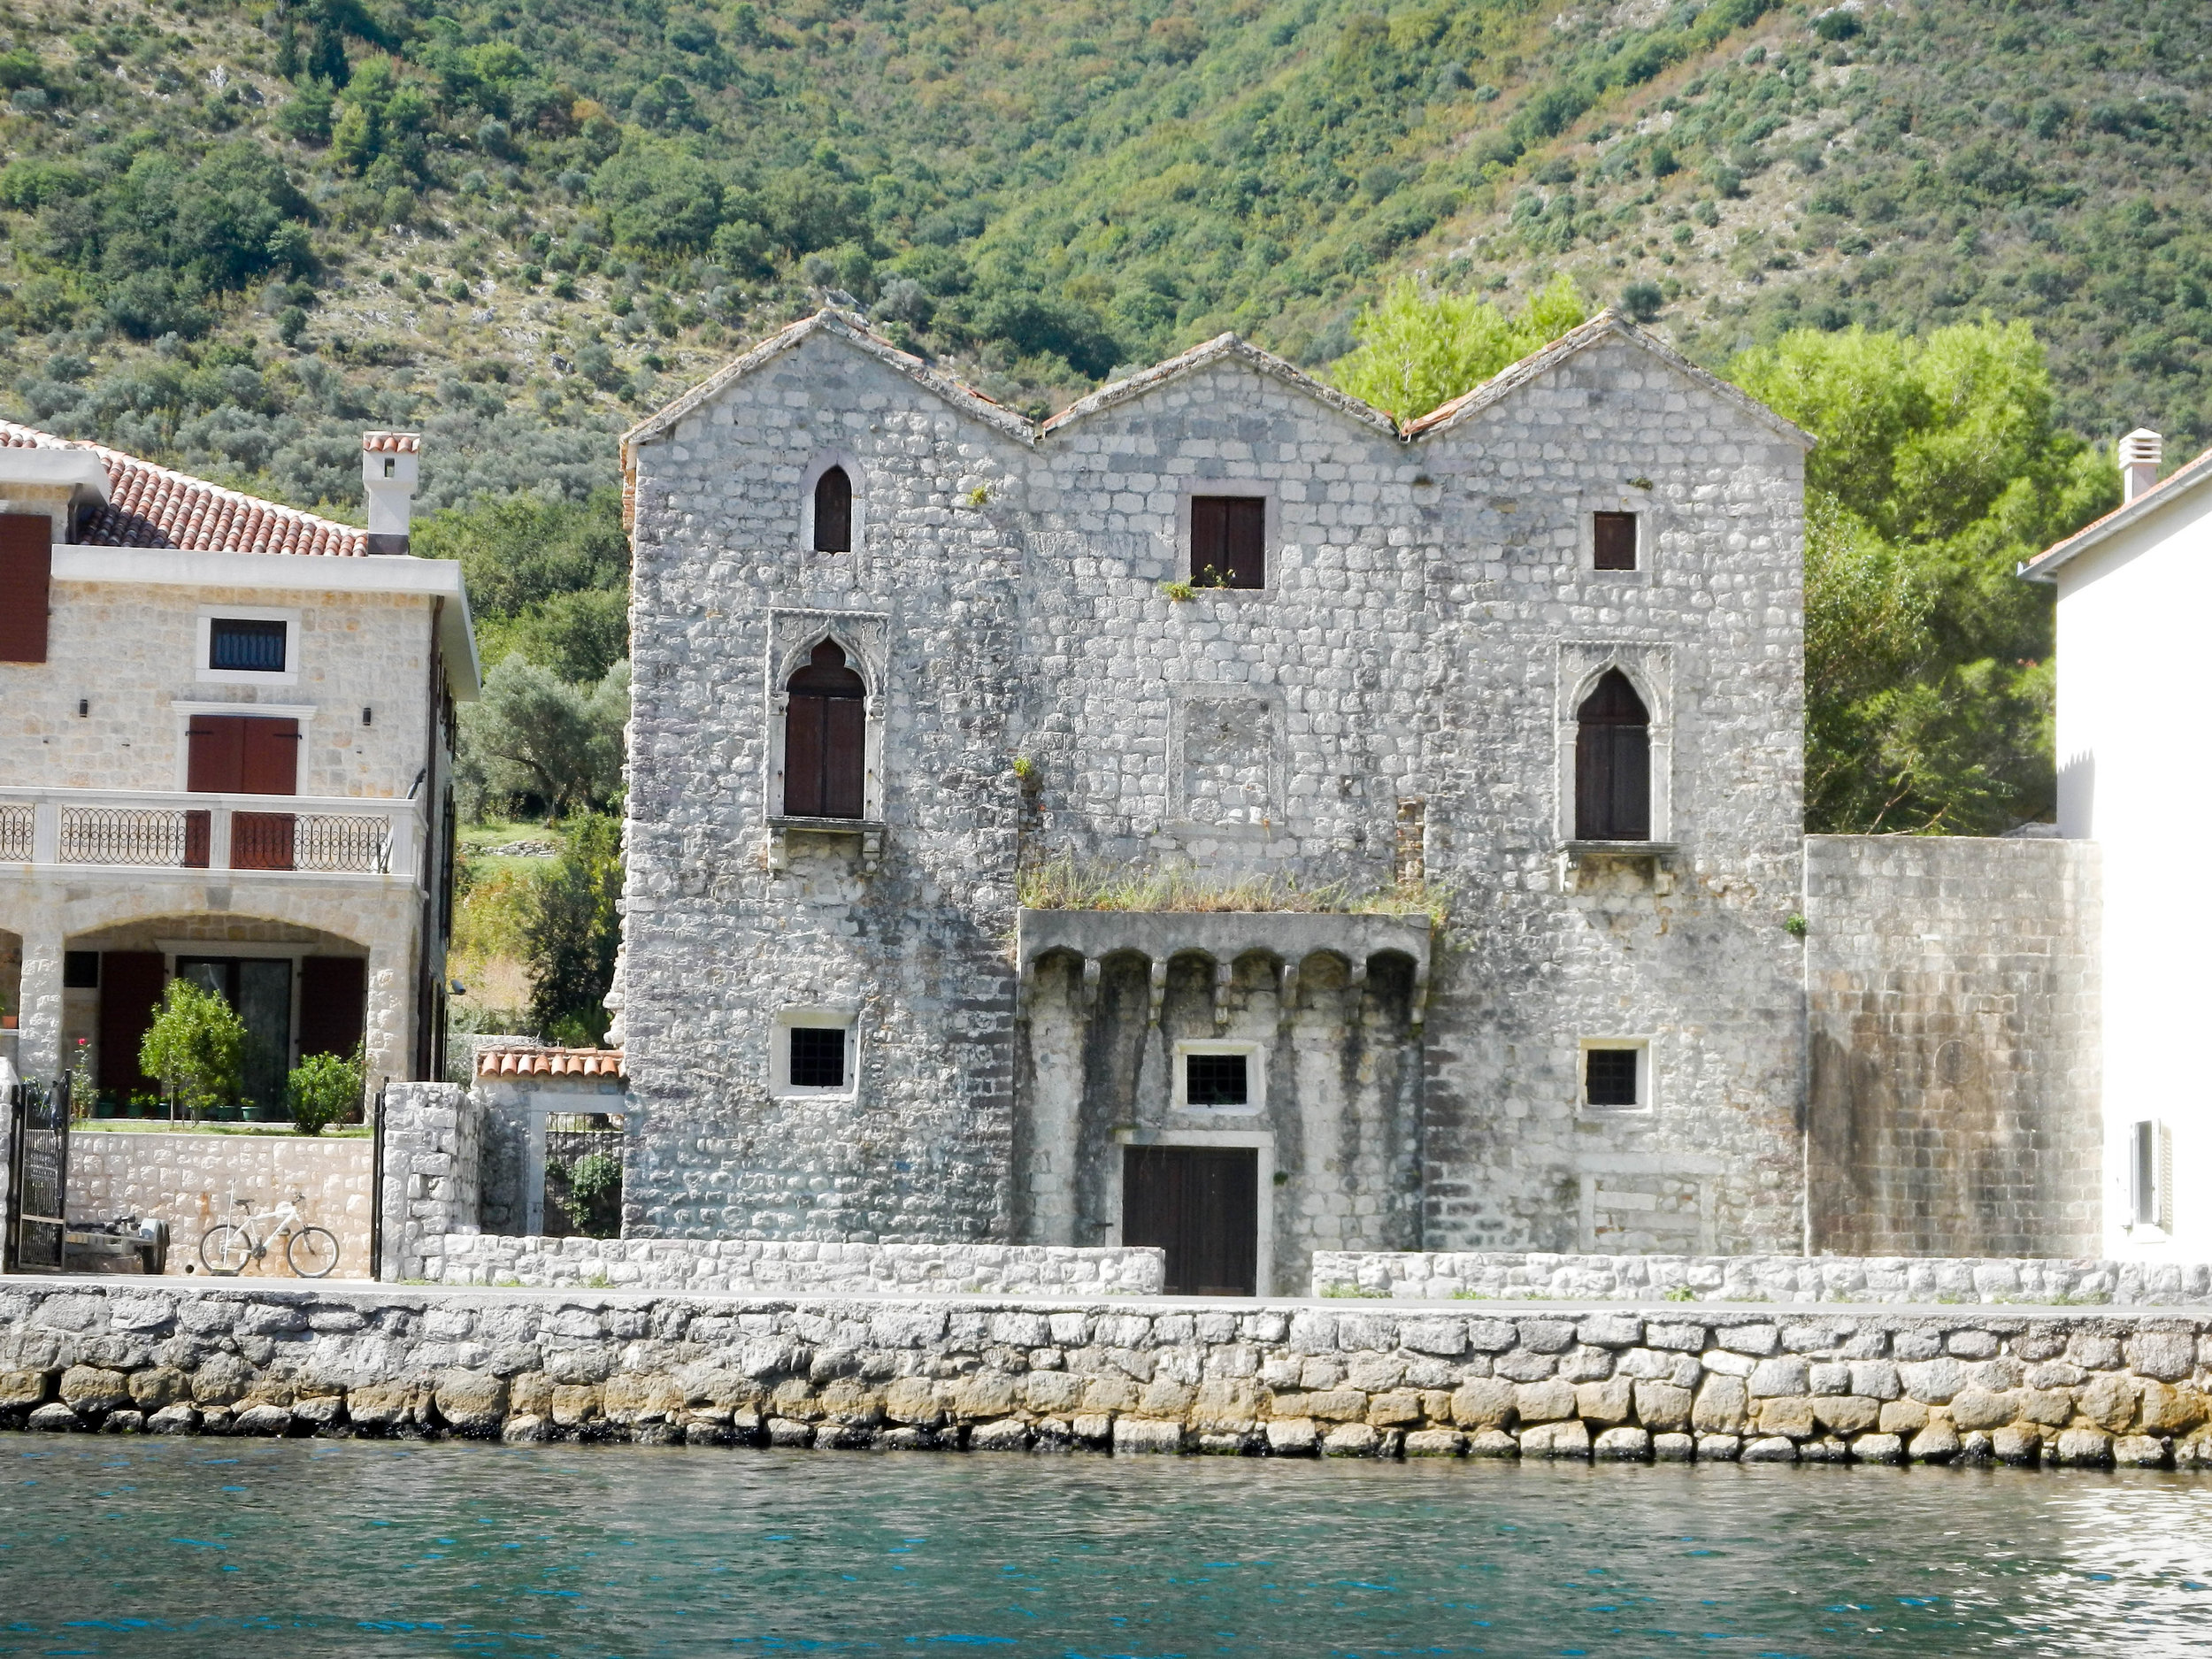 Old house (3 sisters sad story) from kayak, Kotor, Montenegro